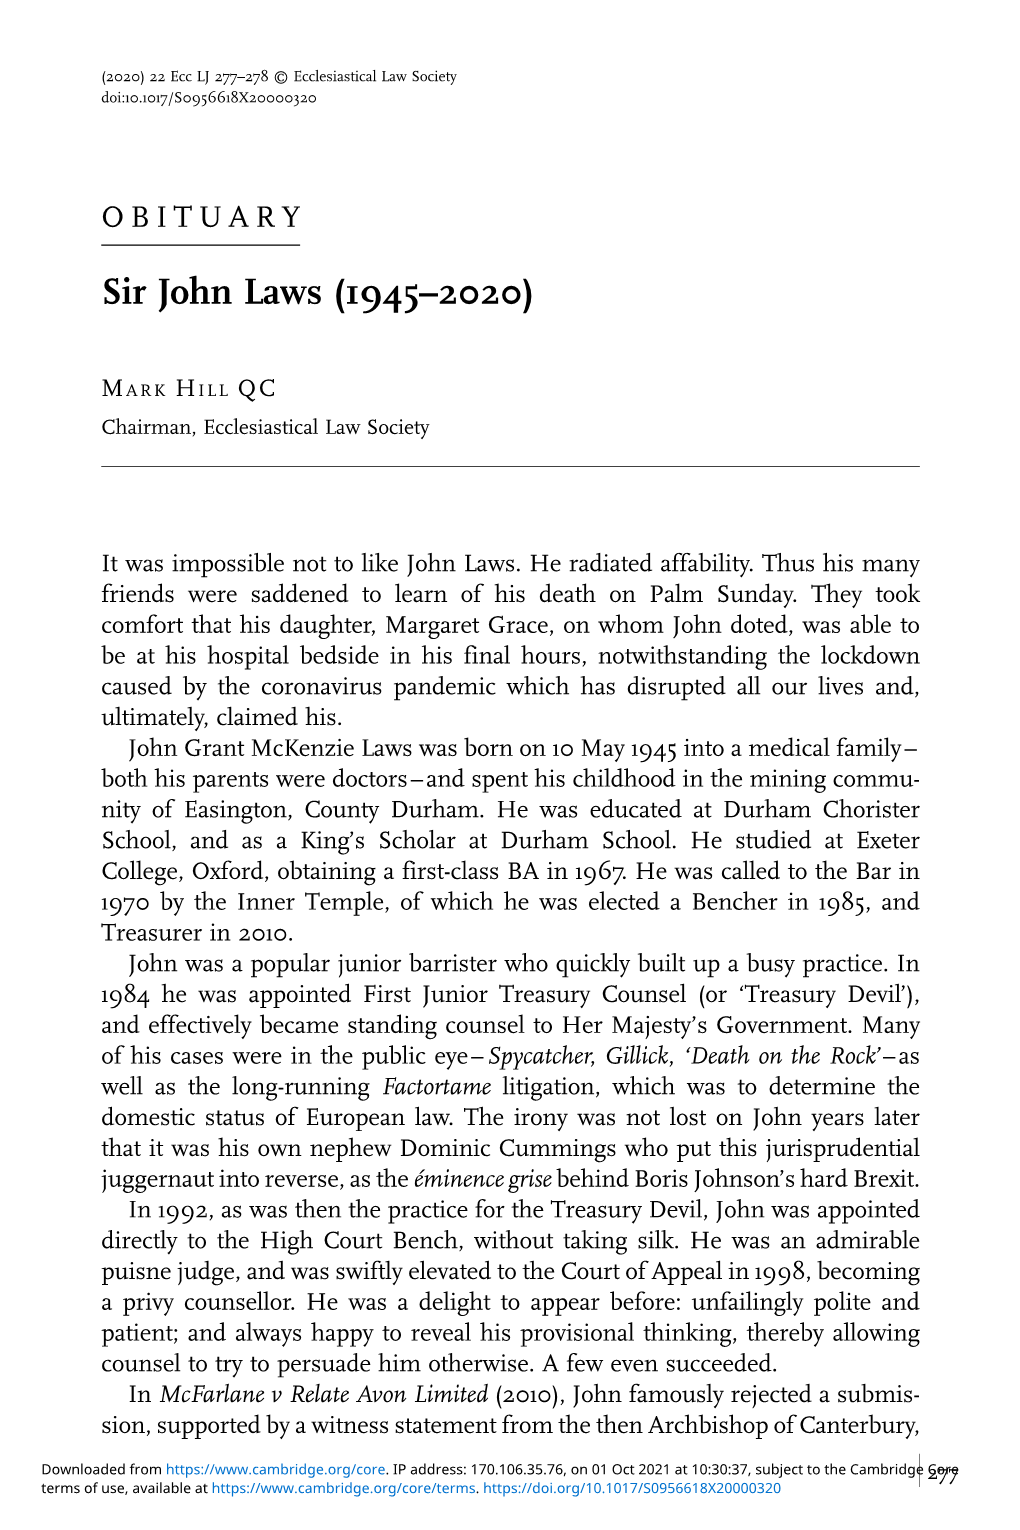 Sir John Laws (1945–2020)